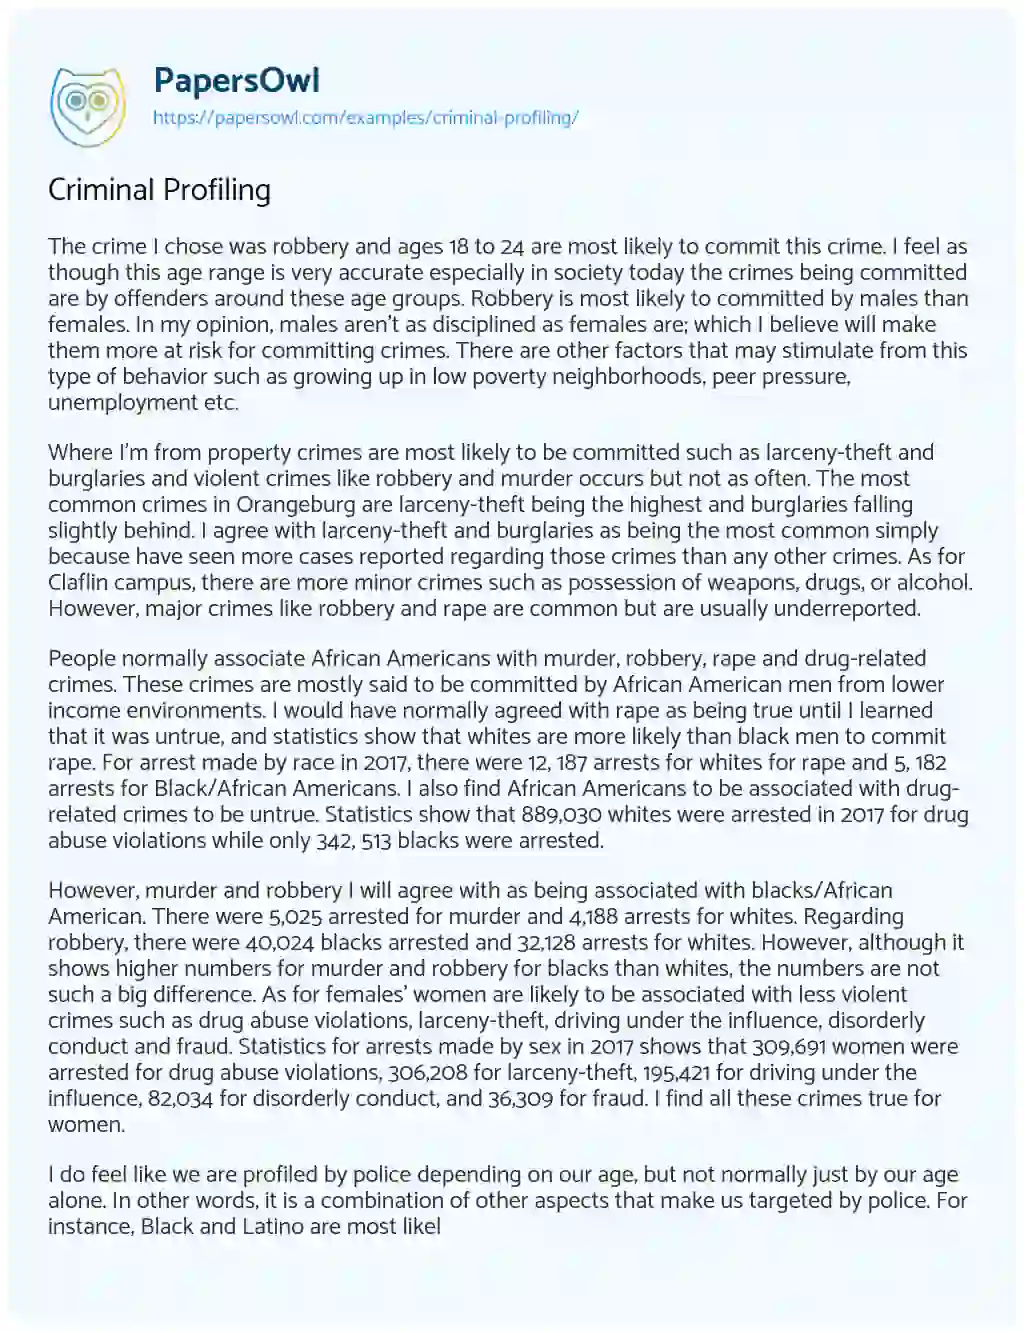 Essay on Criminal Profiling